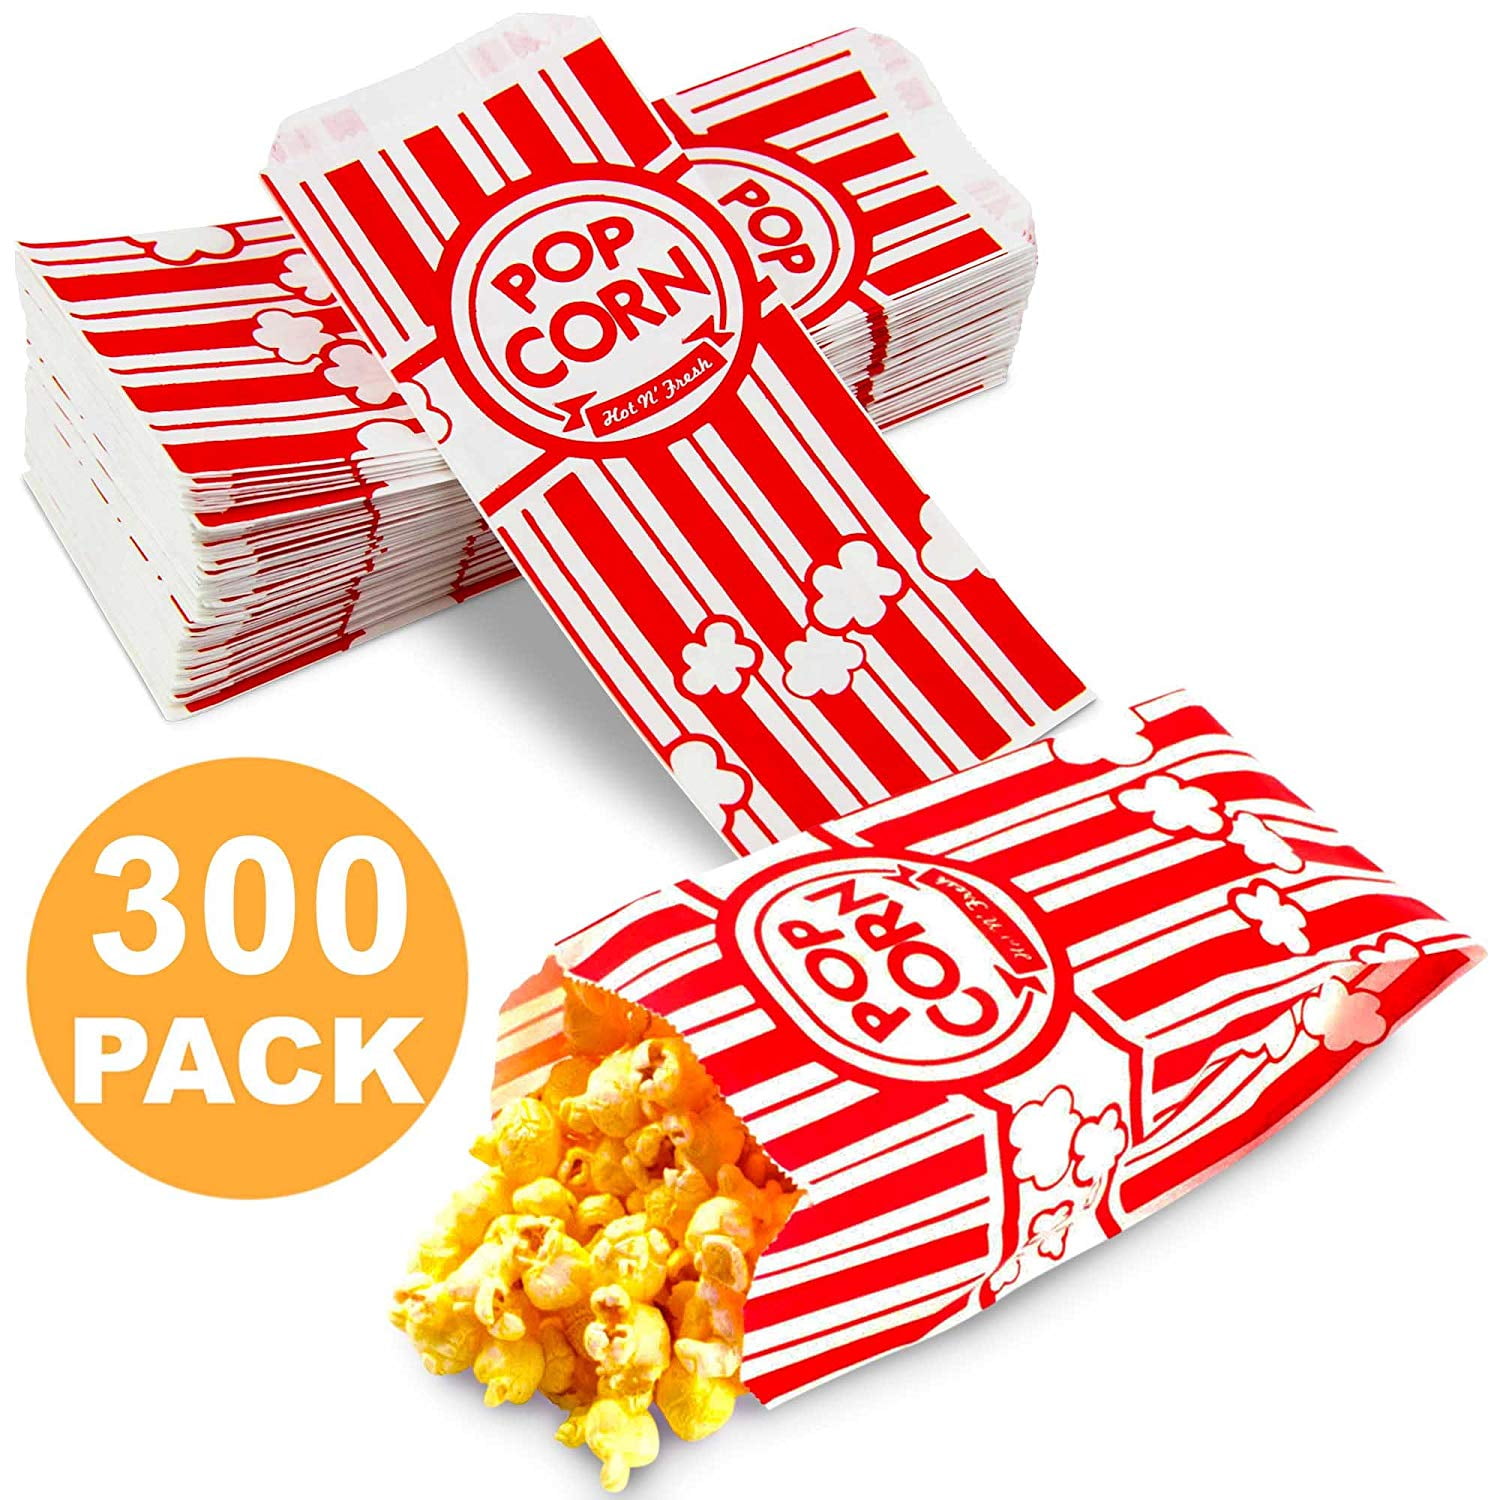 100 Count 1oz Small Economy Popcorn Bags Burst Design 3.5" X 8" Pinch Bottom 